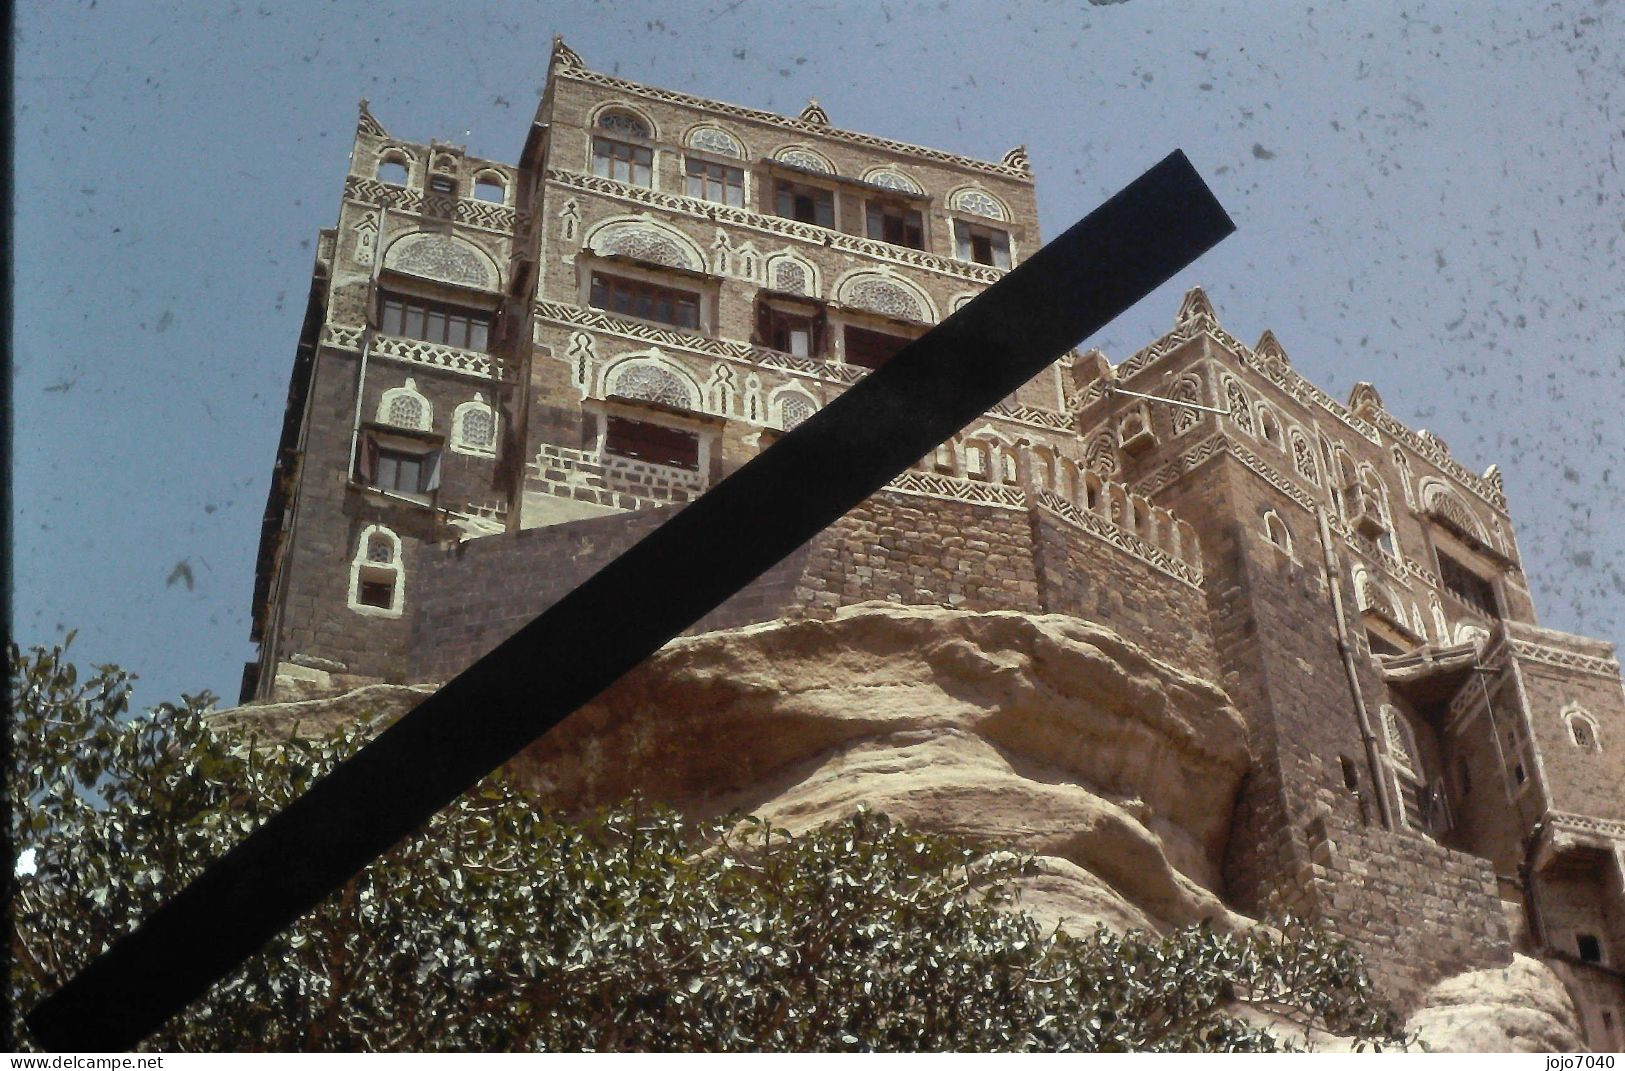 Yemen 1980 - Diapositives